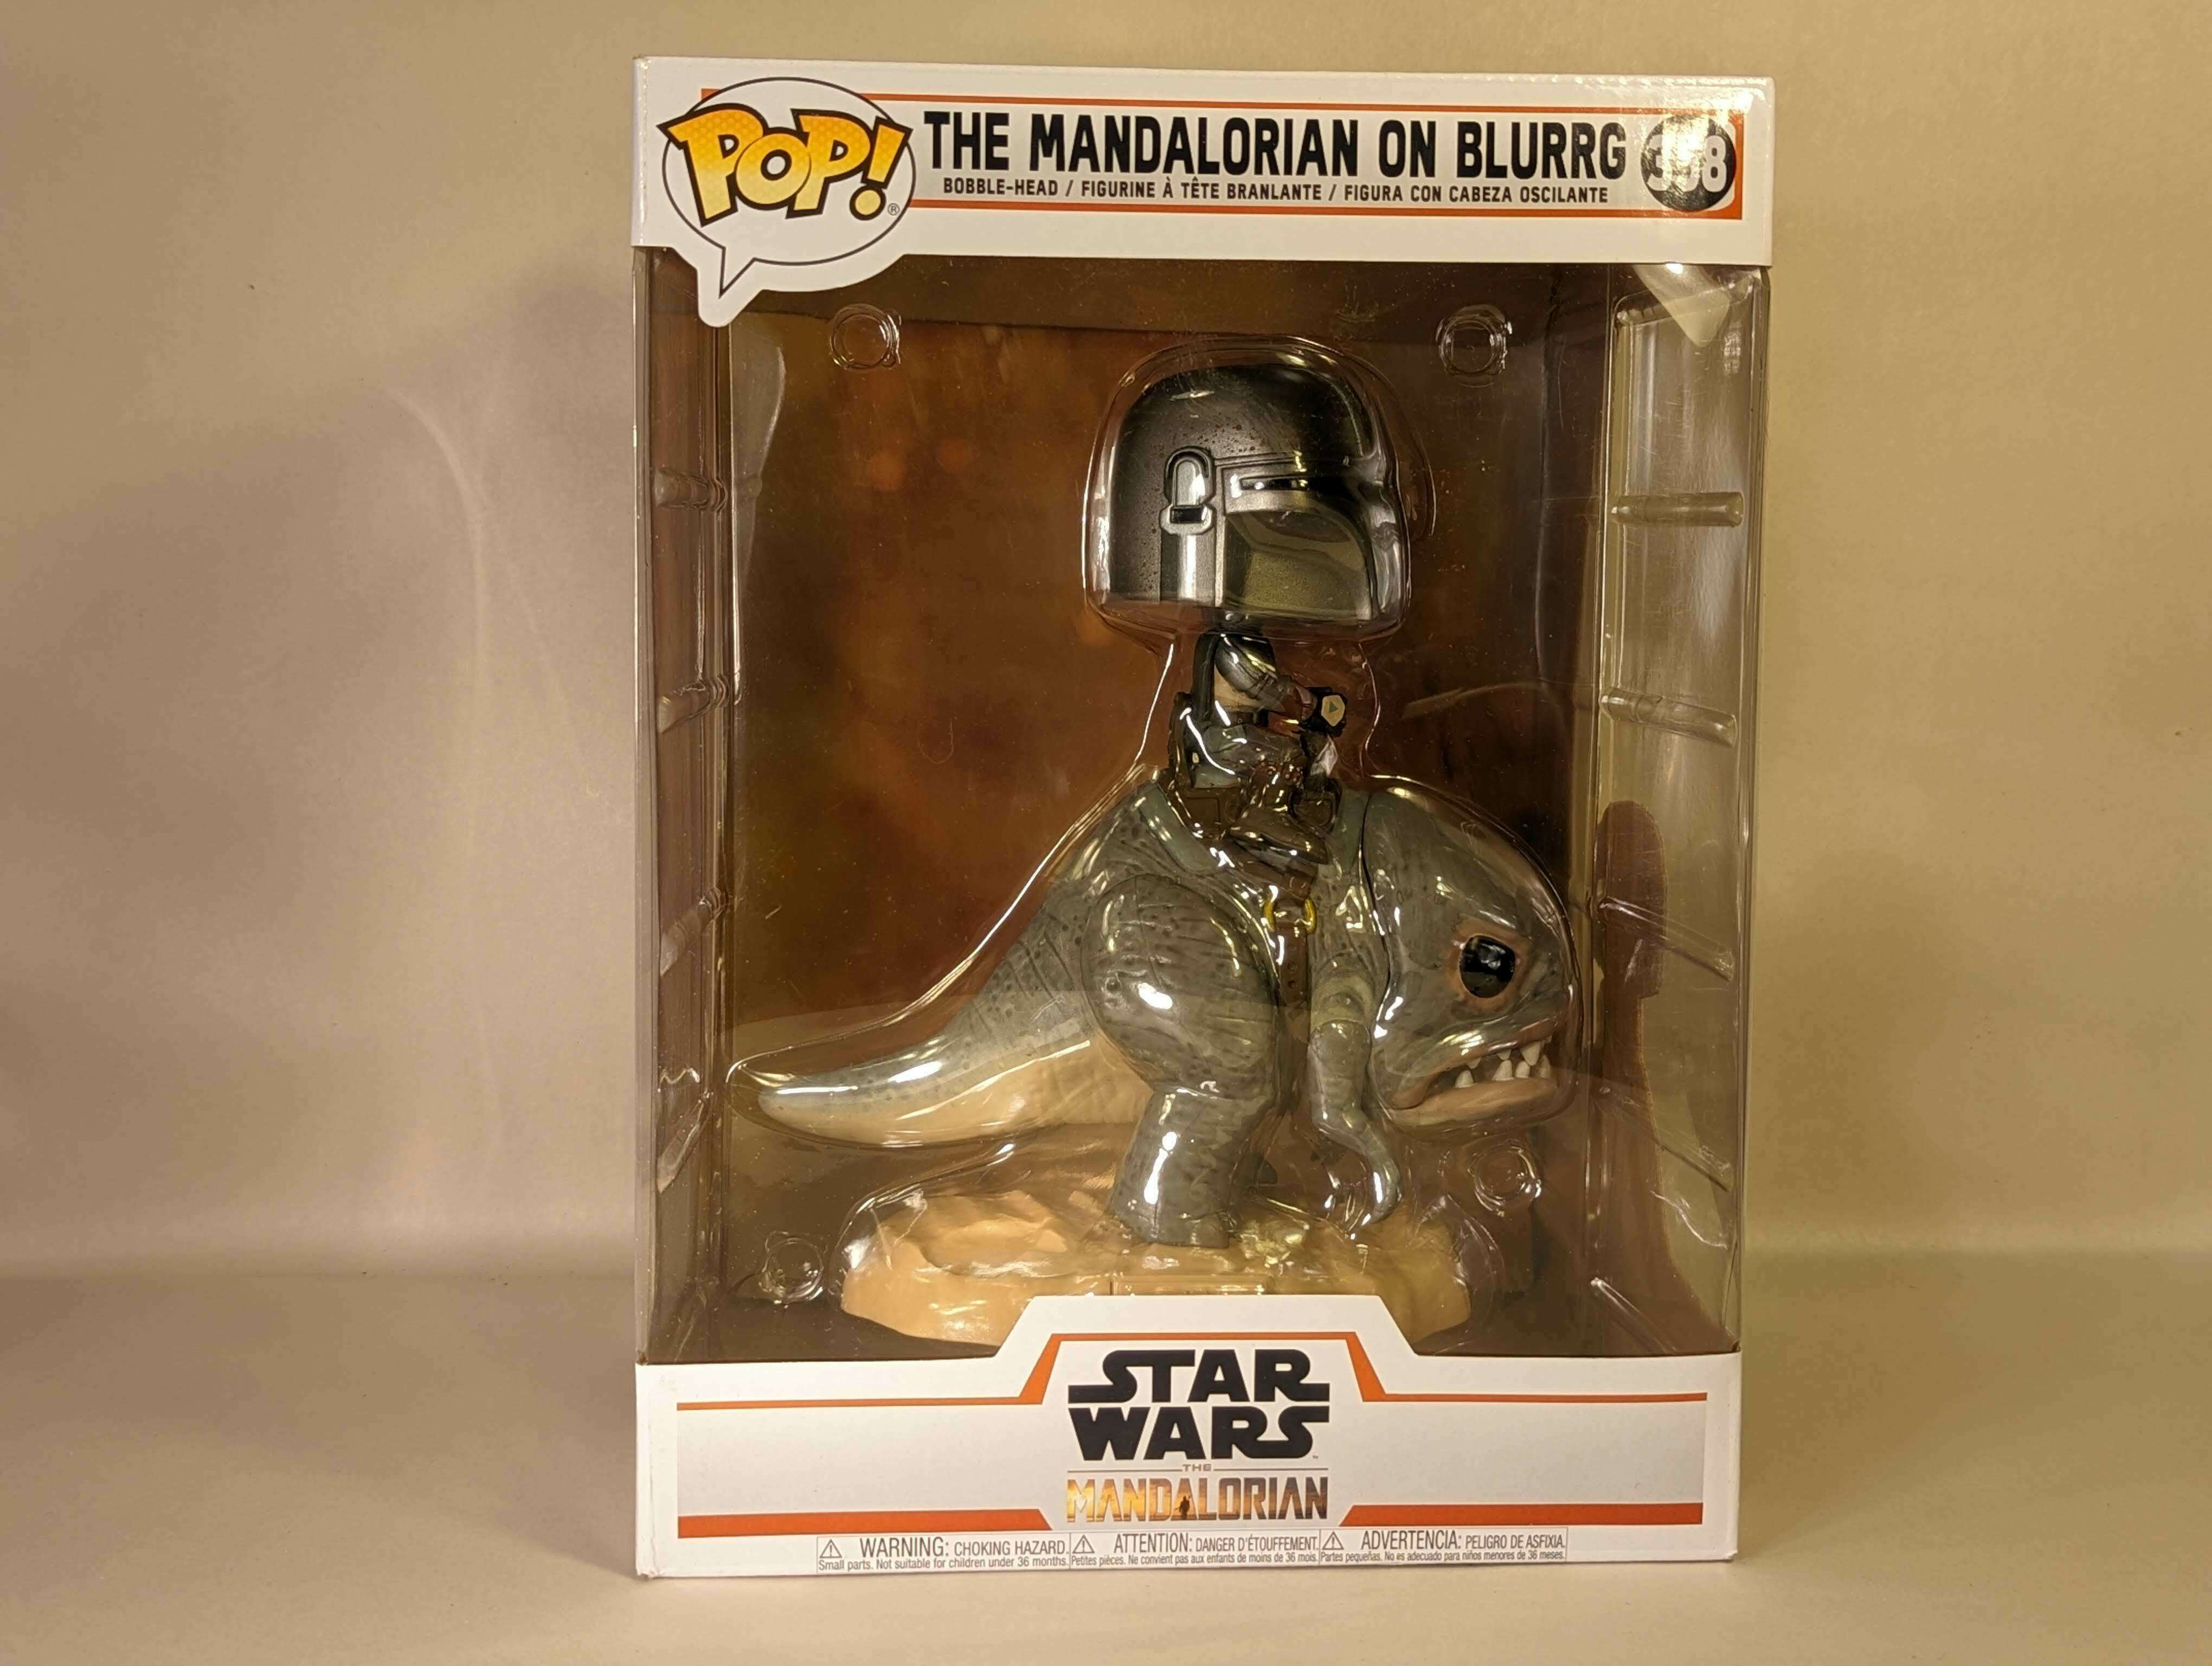 Figurine The Mandalorian On Blurrg / Star Wars The Mandalorian